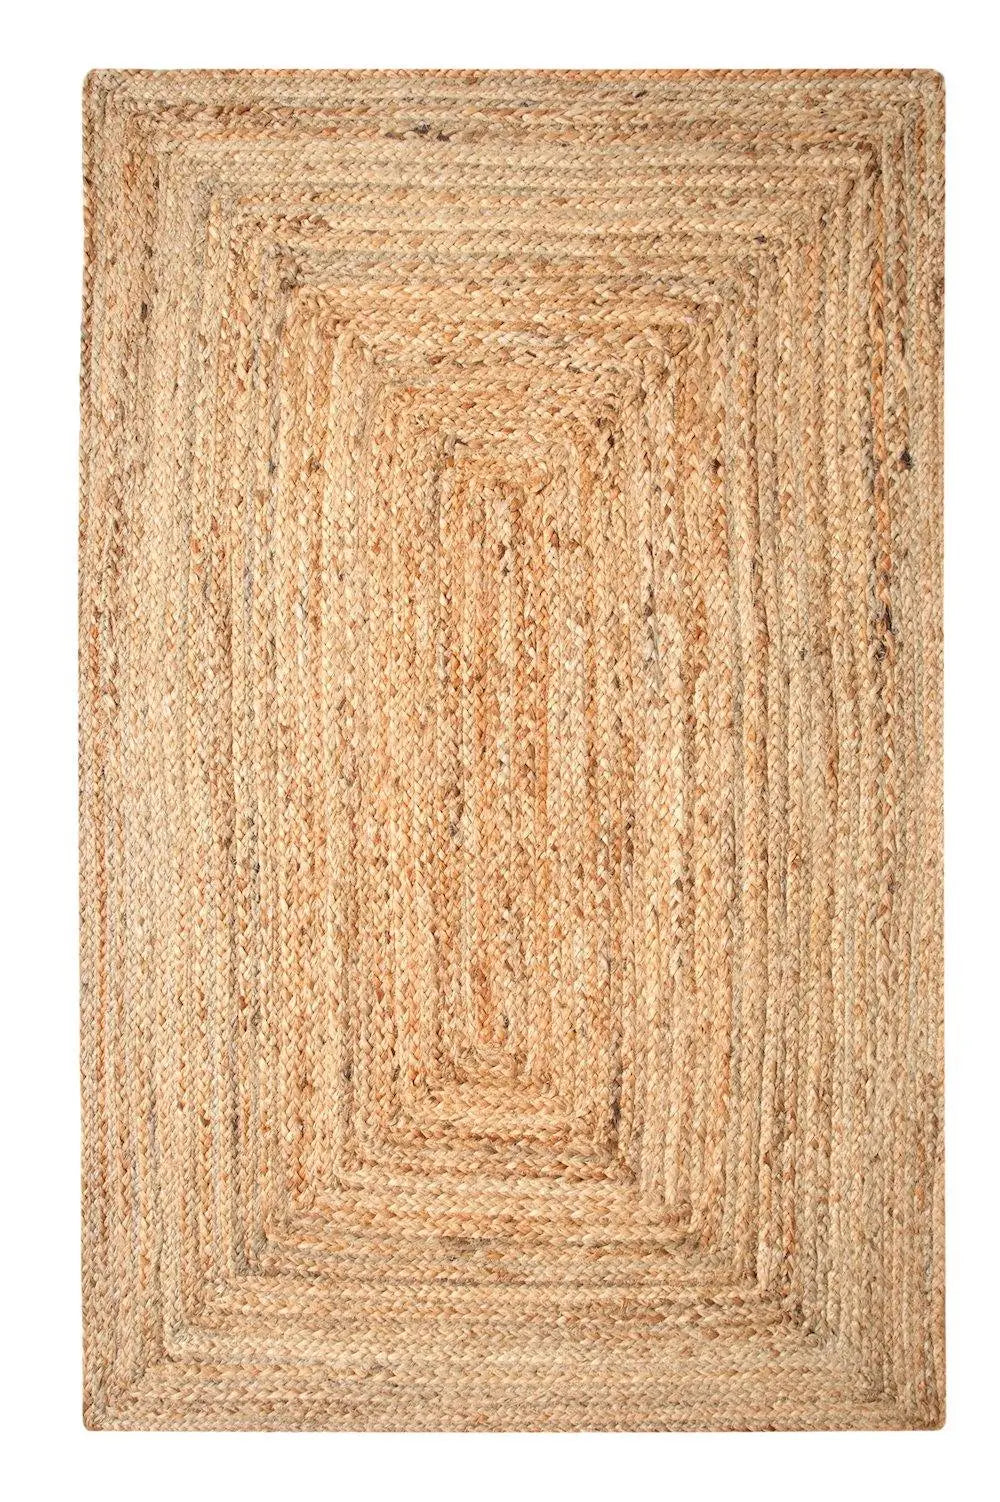 DHAKA Kitchen Rug Hand Woven Flat Braided Jute Beige Mat 120 x 180